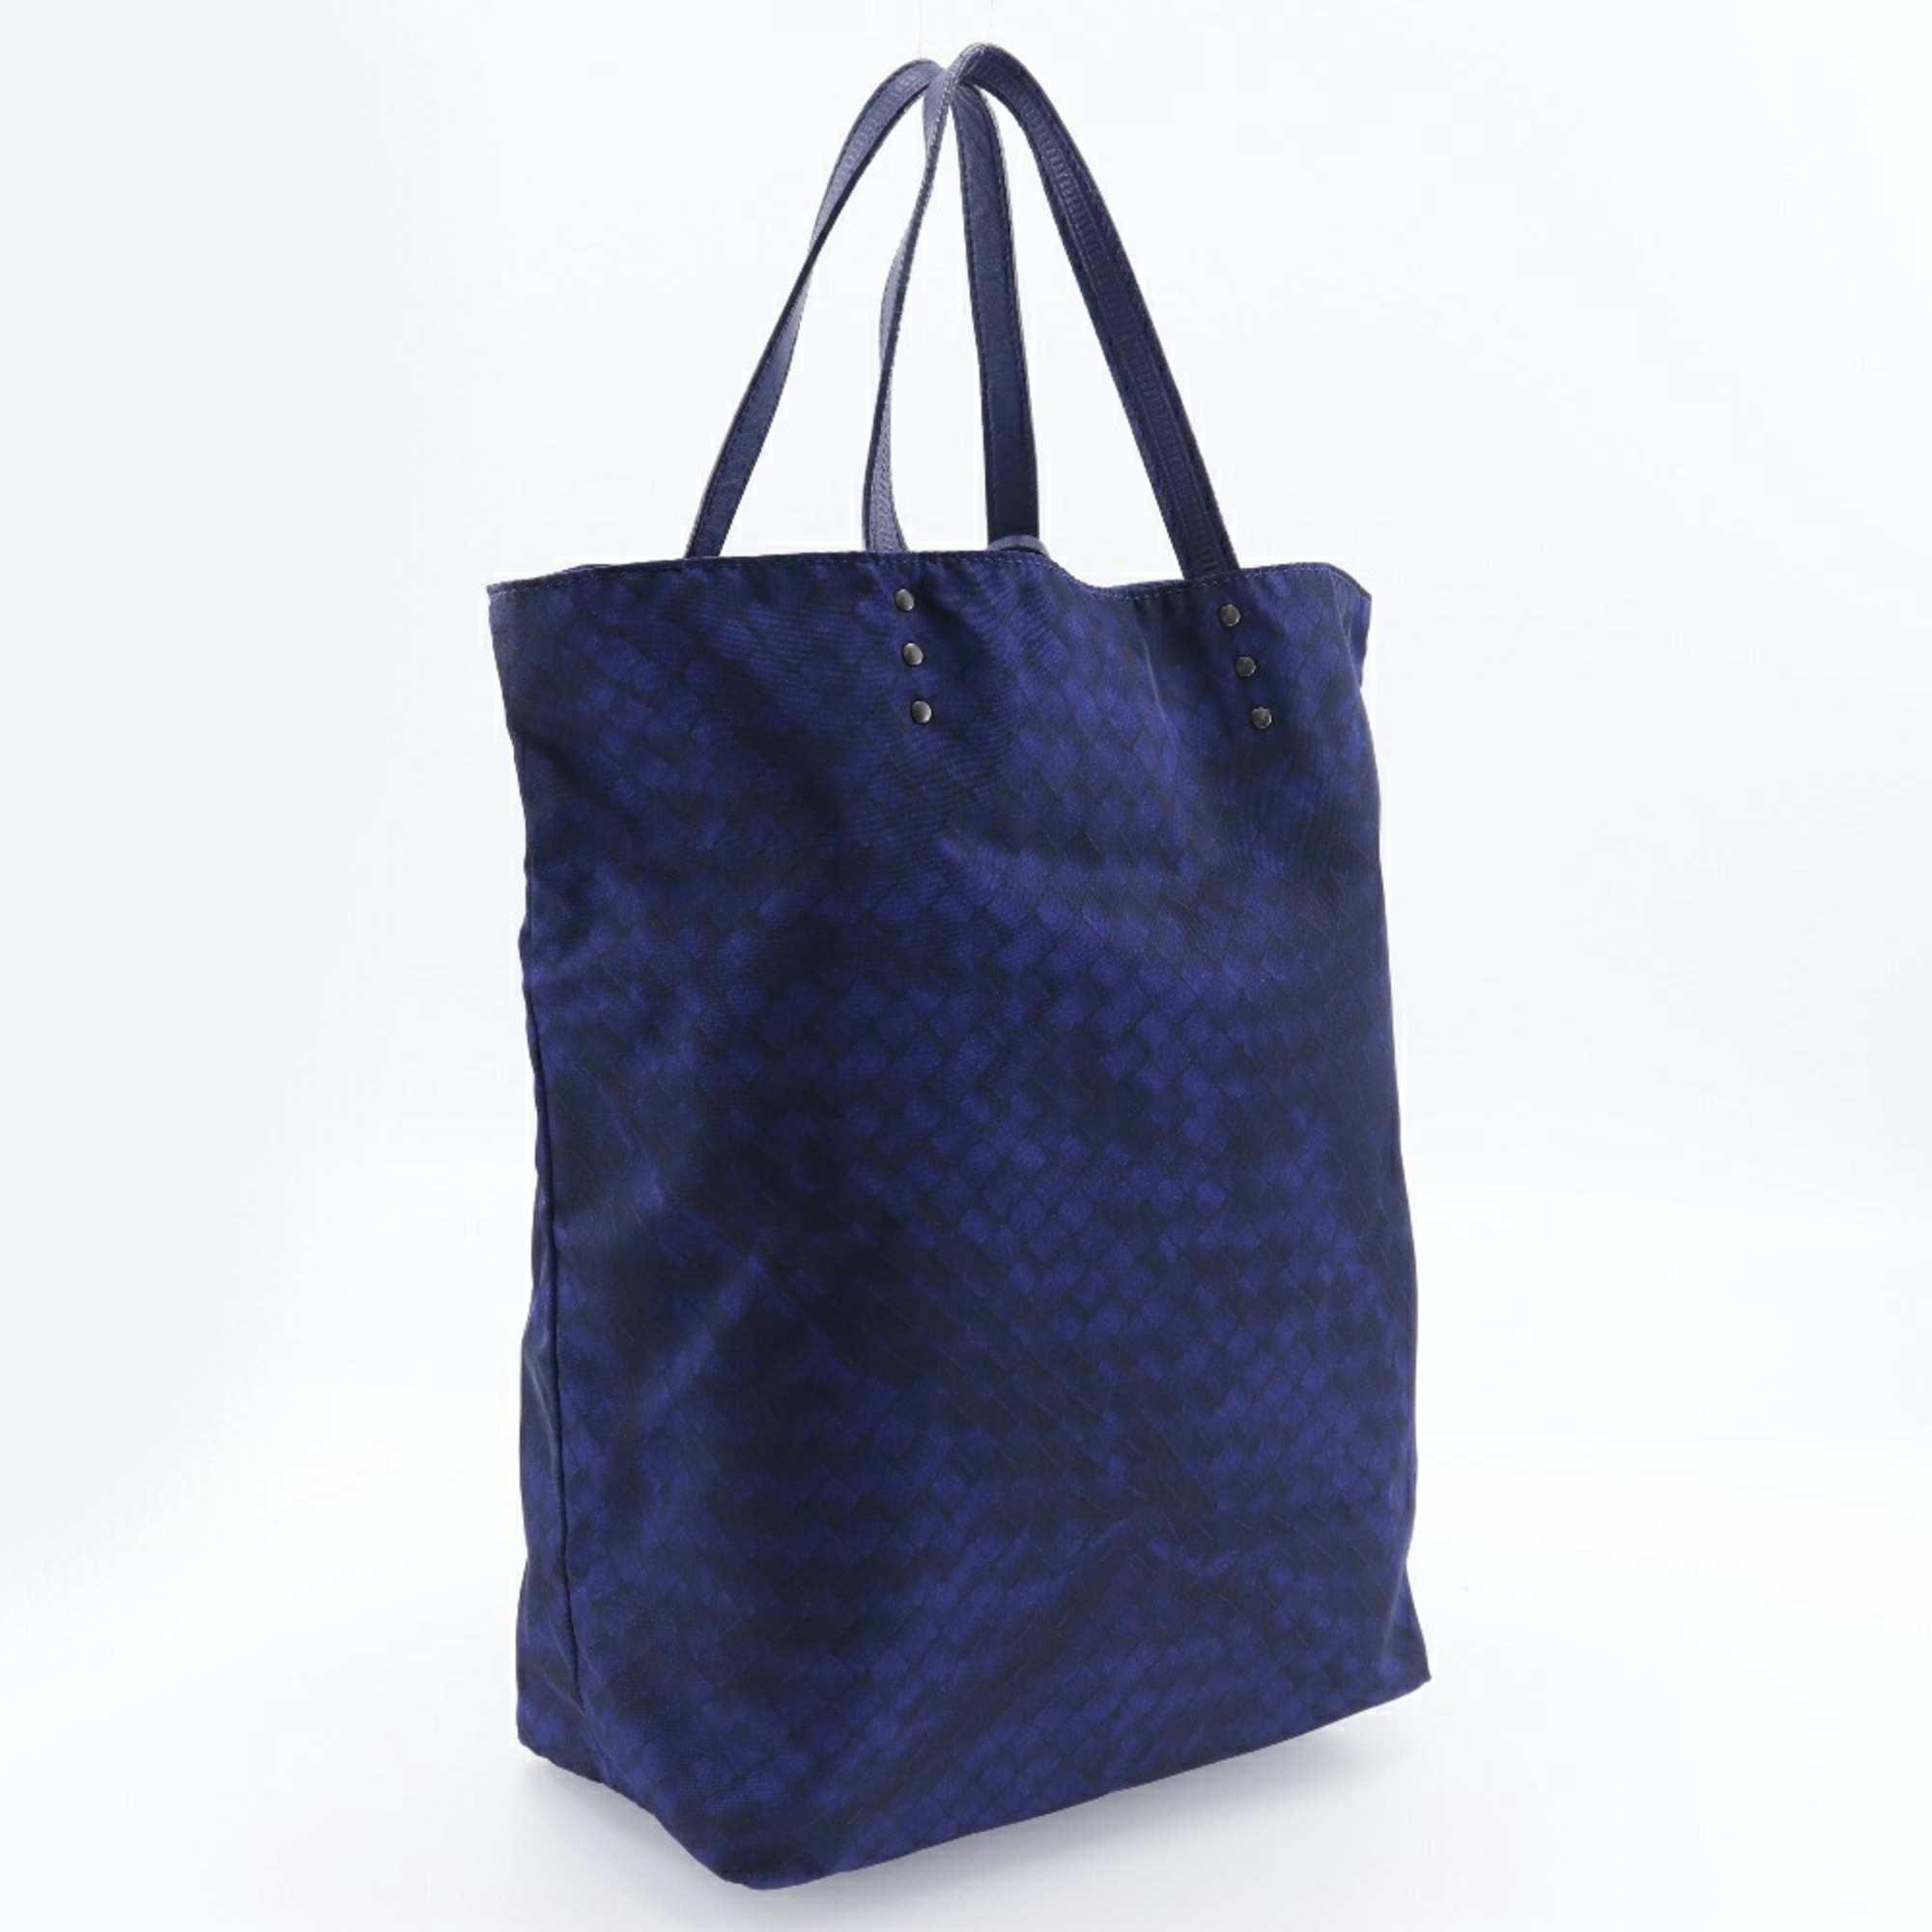 Bottega Veneta Intrecciato Illusion Tote Bag, Navy Blue, Nylon, Intrusion, Unisex